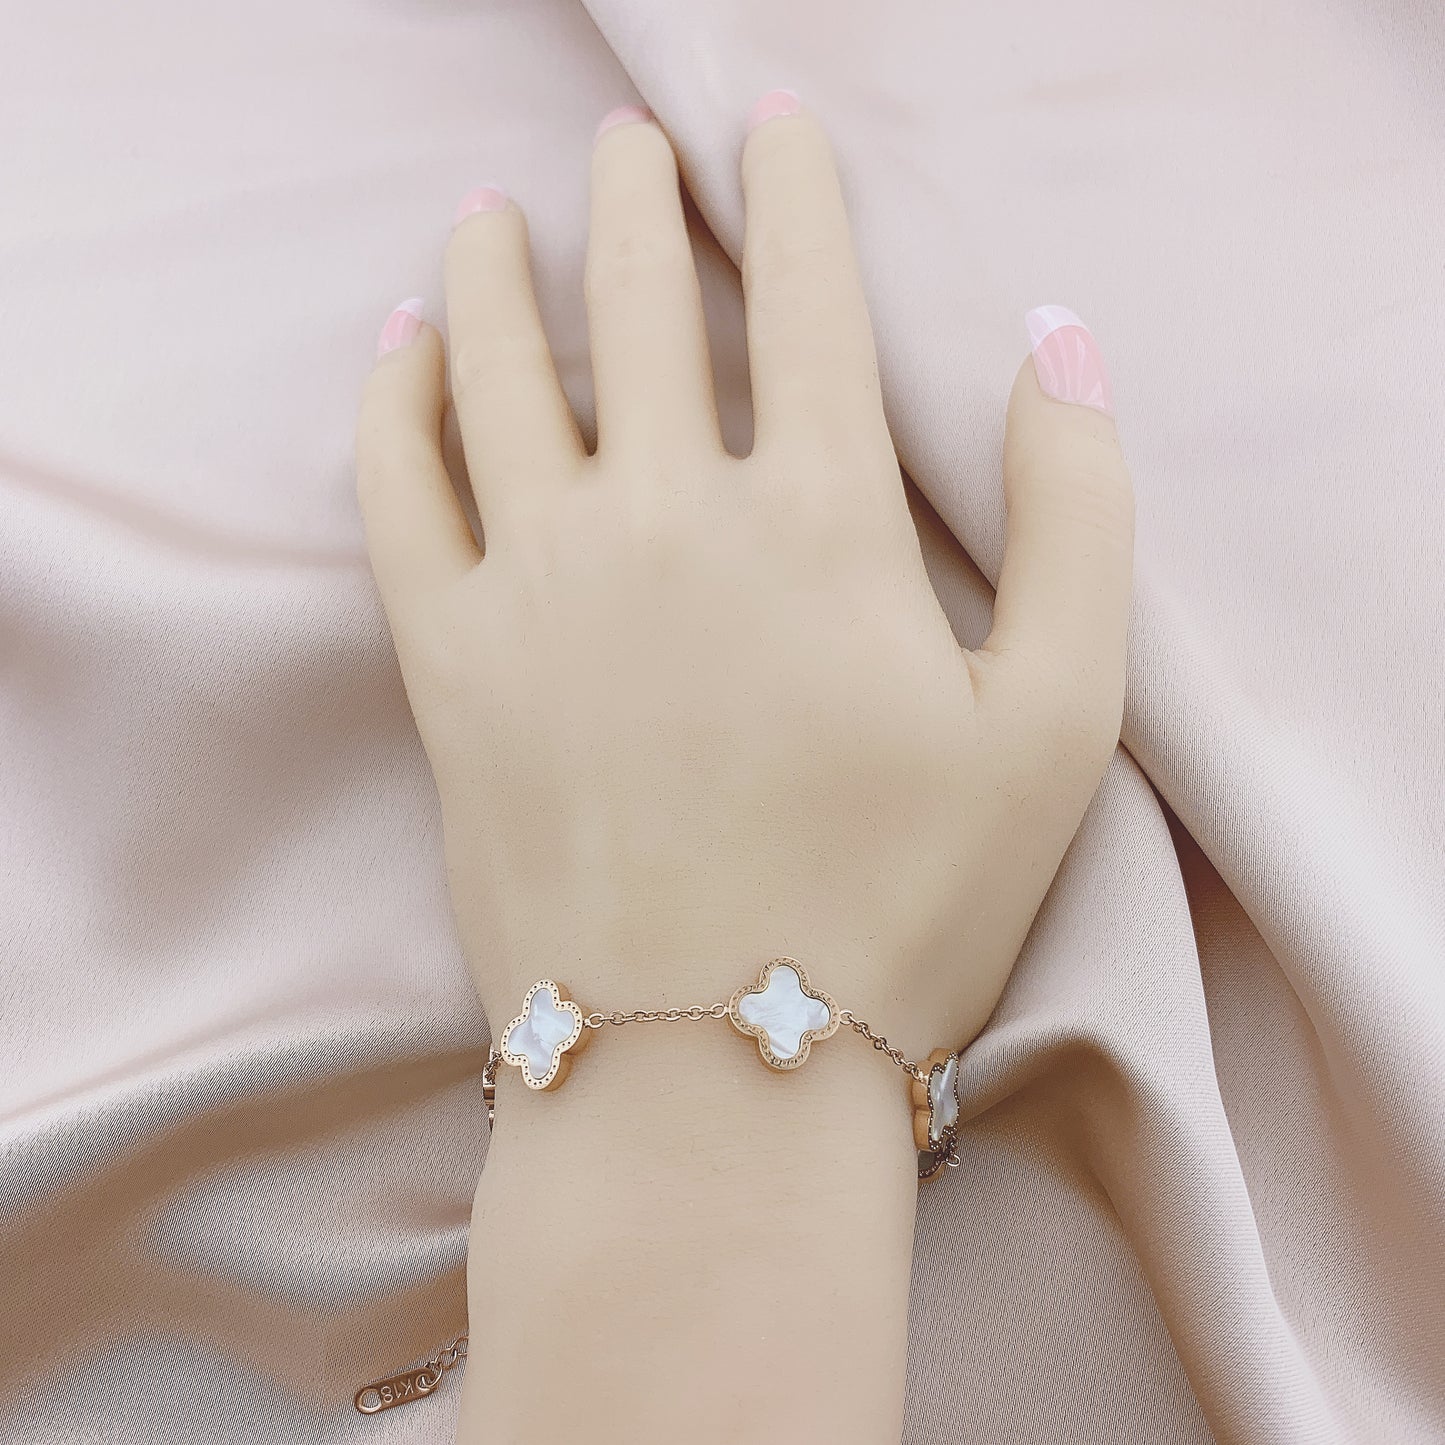 Women's Fashion White Shell Four Clover Bracelet